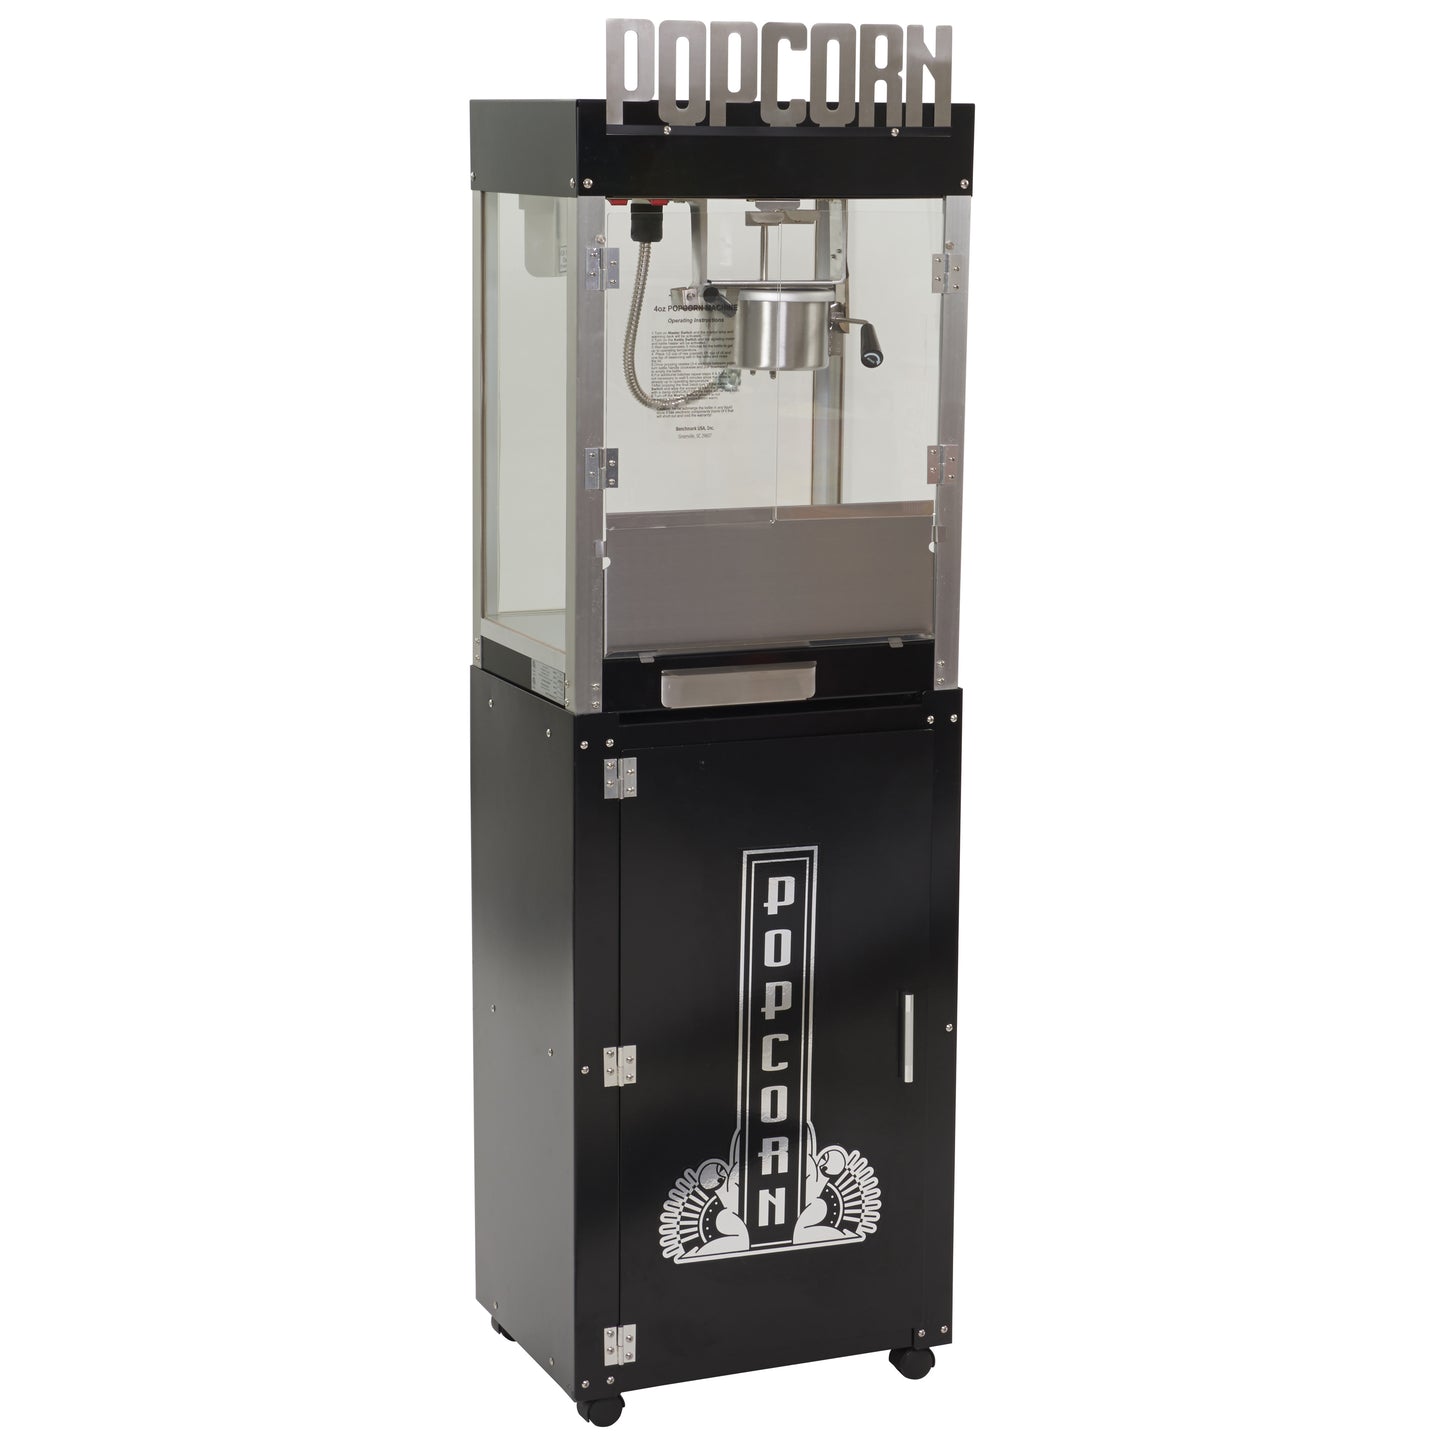 30050 - BenchmarkUSA "Metropolitan" Popcorn Machine Pedestal